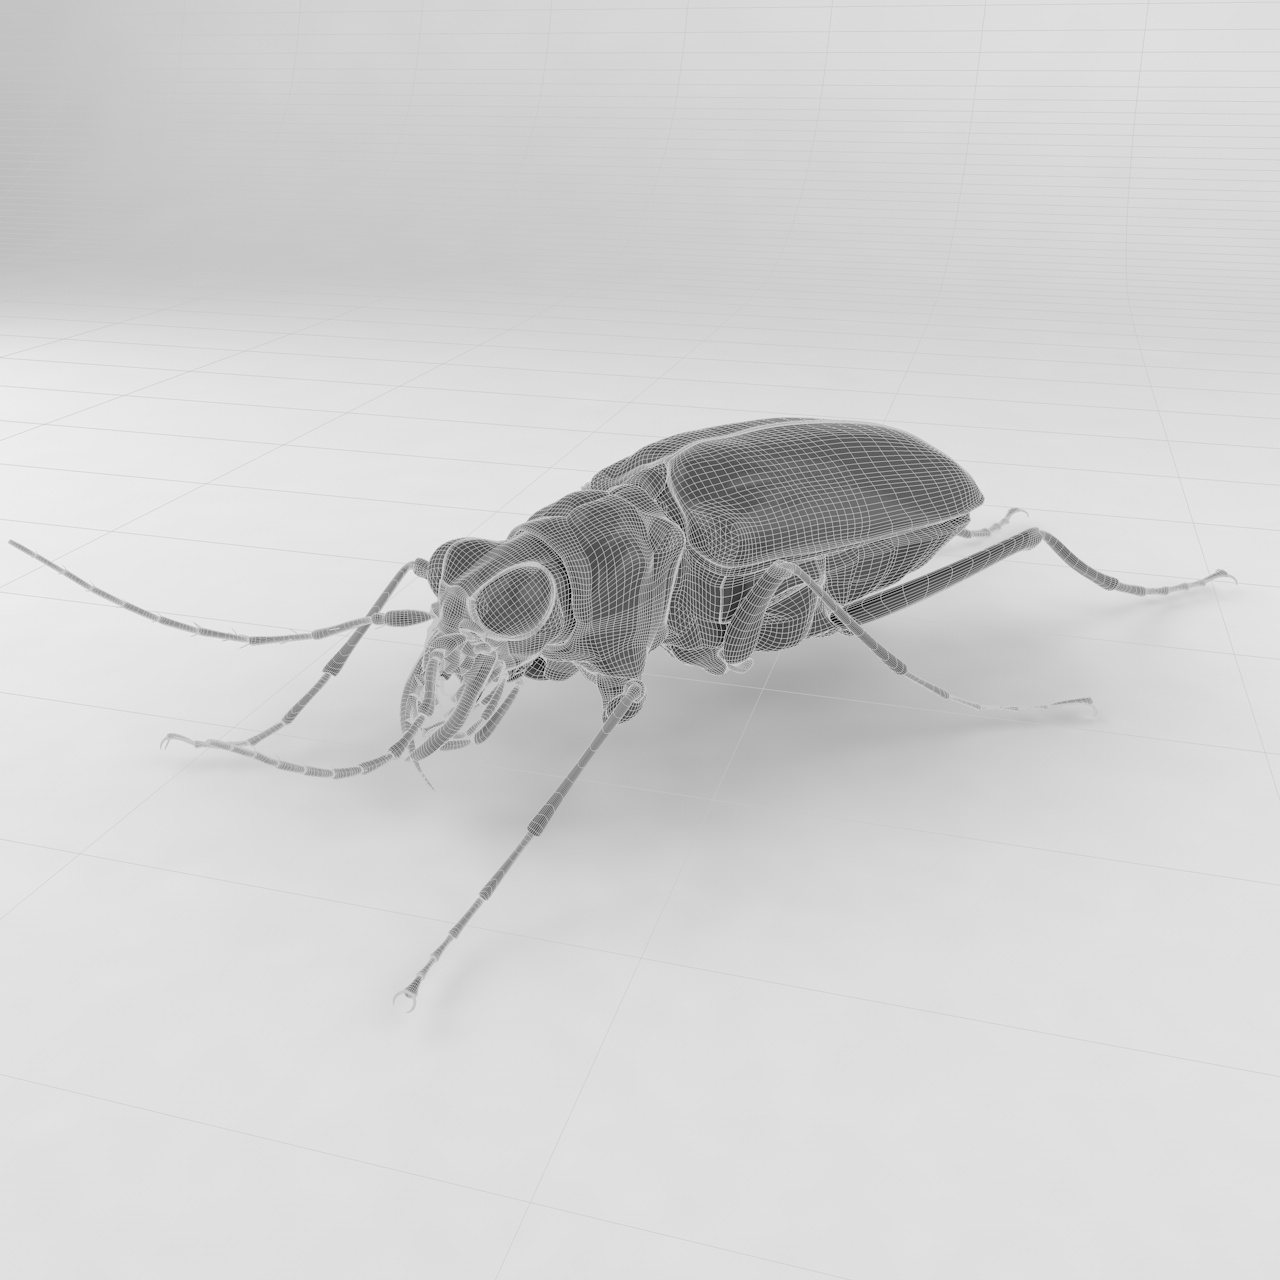 Cicindela japonica böcek böcekleri 3d modeli